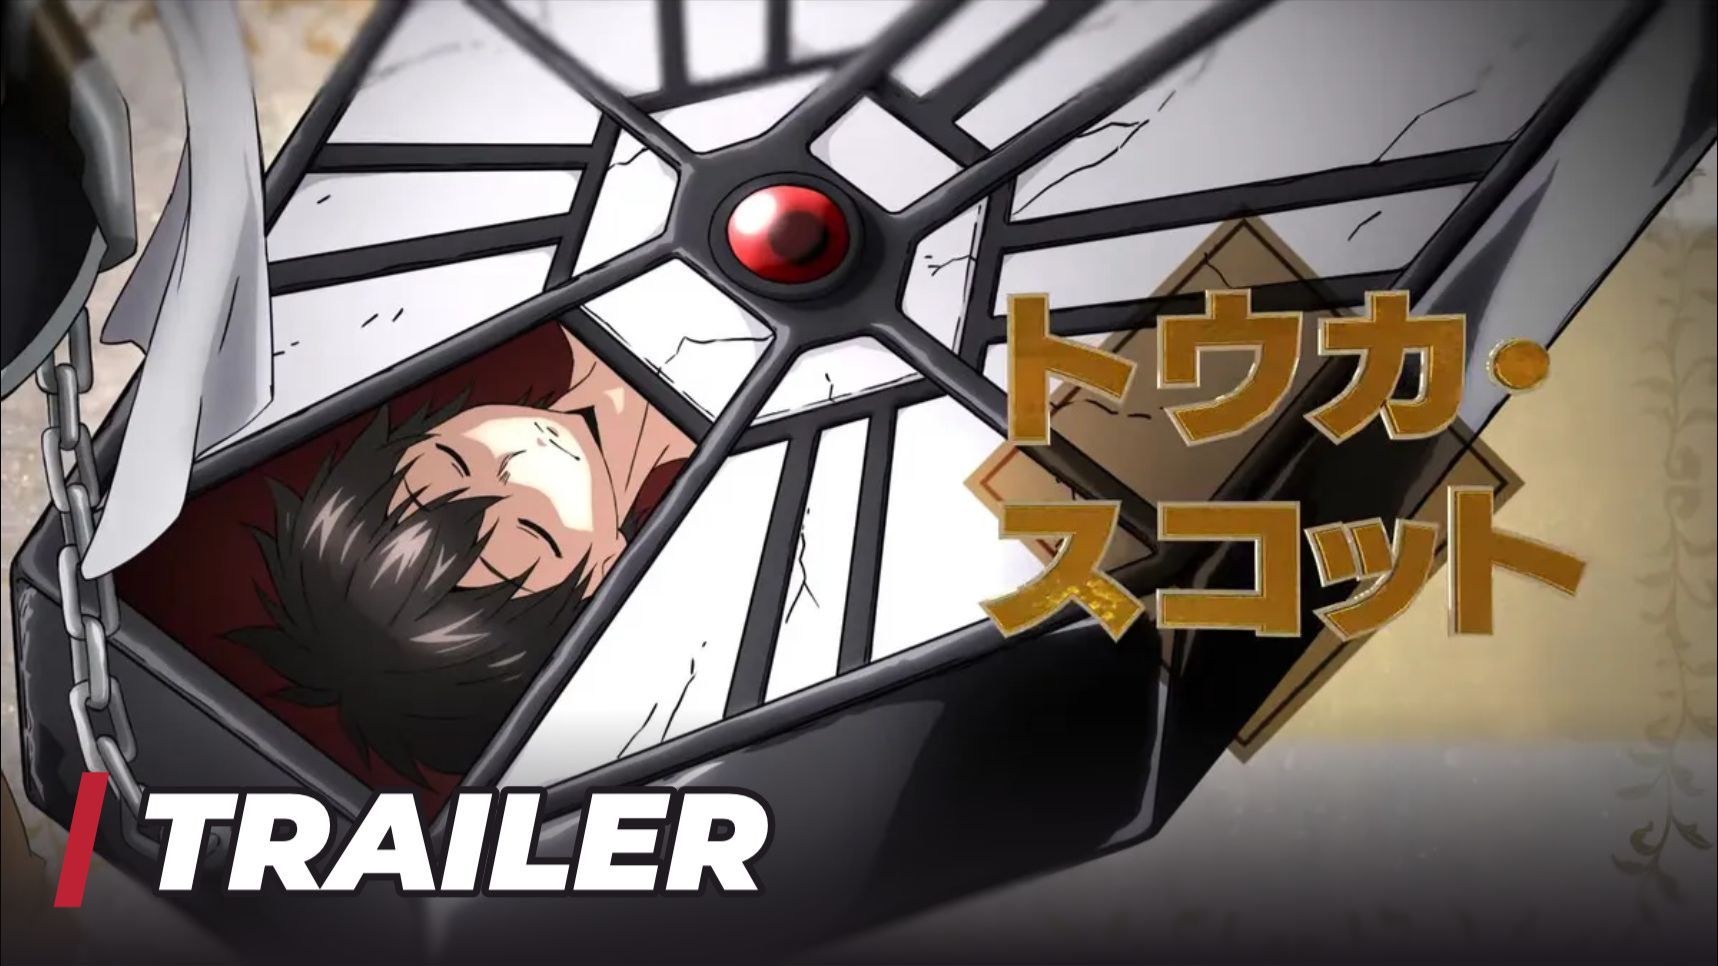 Yuusha ga Shinda!  Official Trailer 